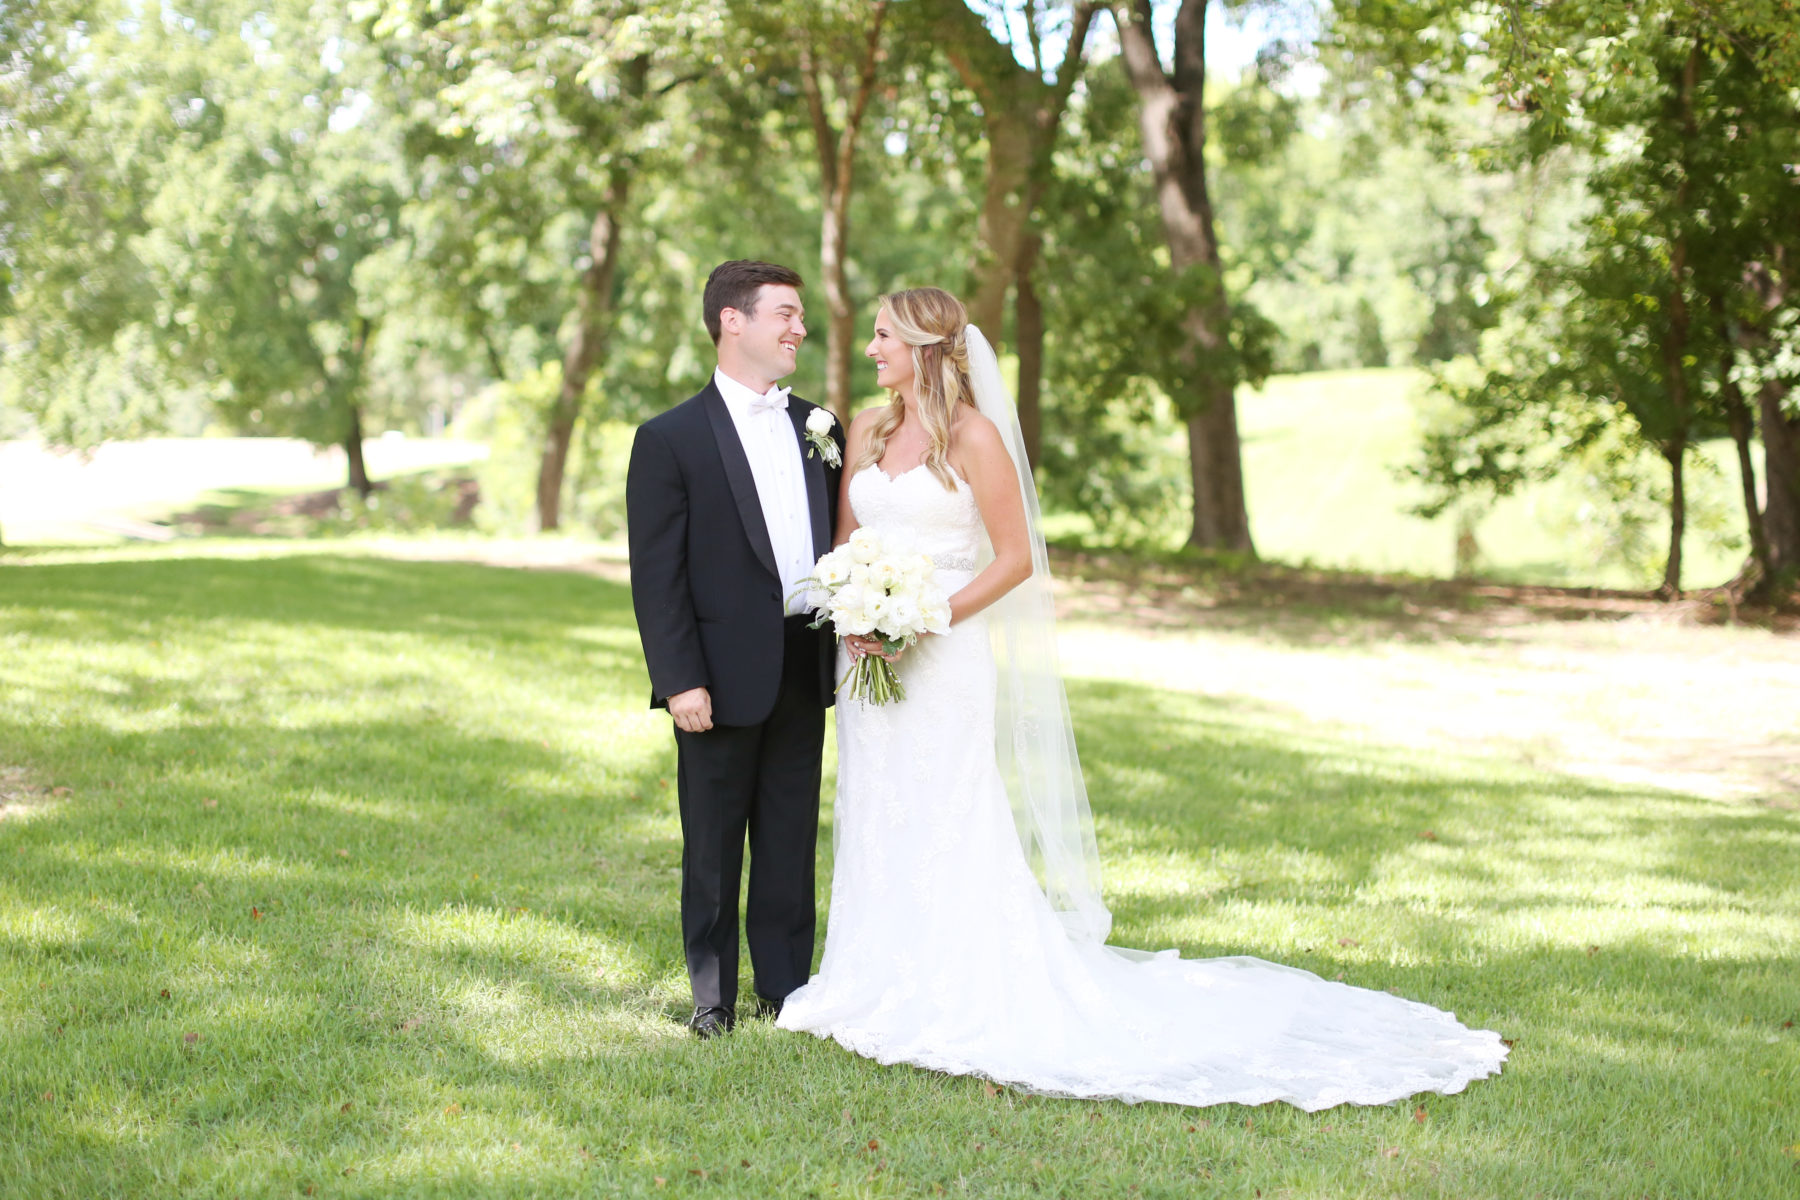 Eliza Kennard Wedding Photography featured on Nashville Bride Guide